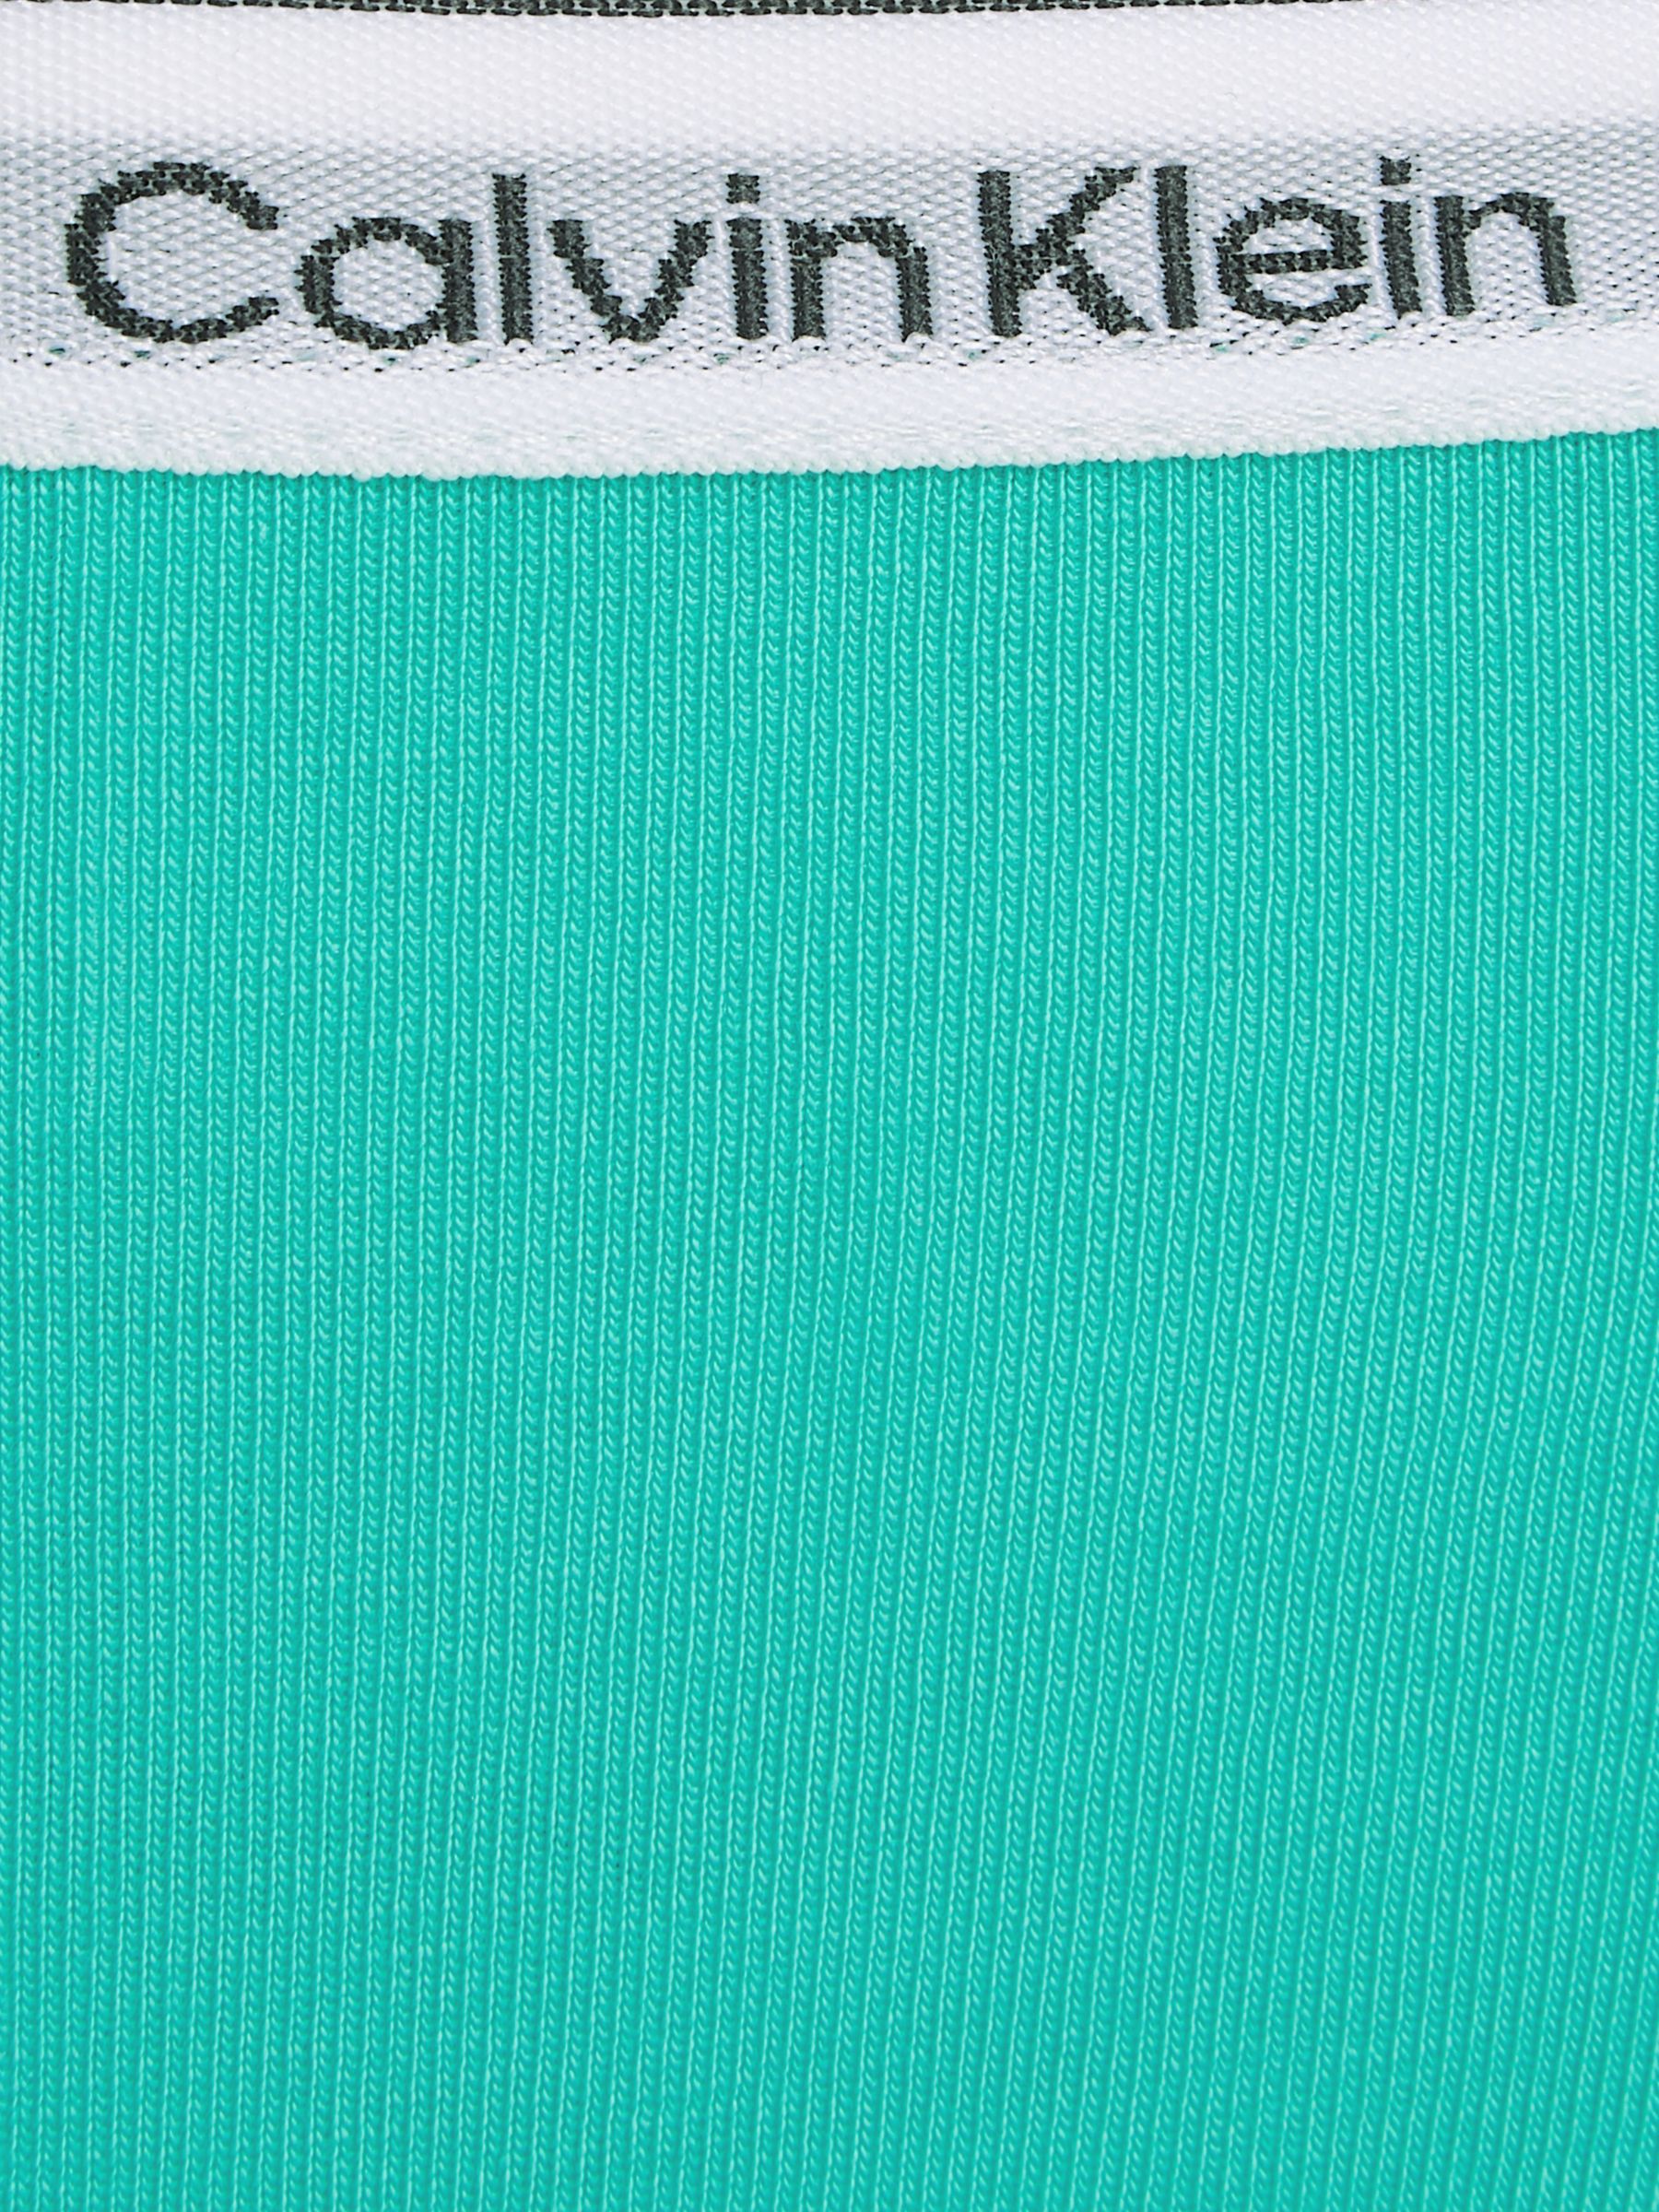 Calvin Klein Cotton Stretch Logo Waist Bikini Bottoms, Pack of 5, Green/Multi, L